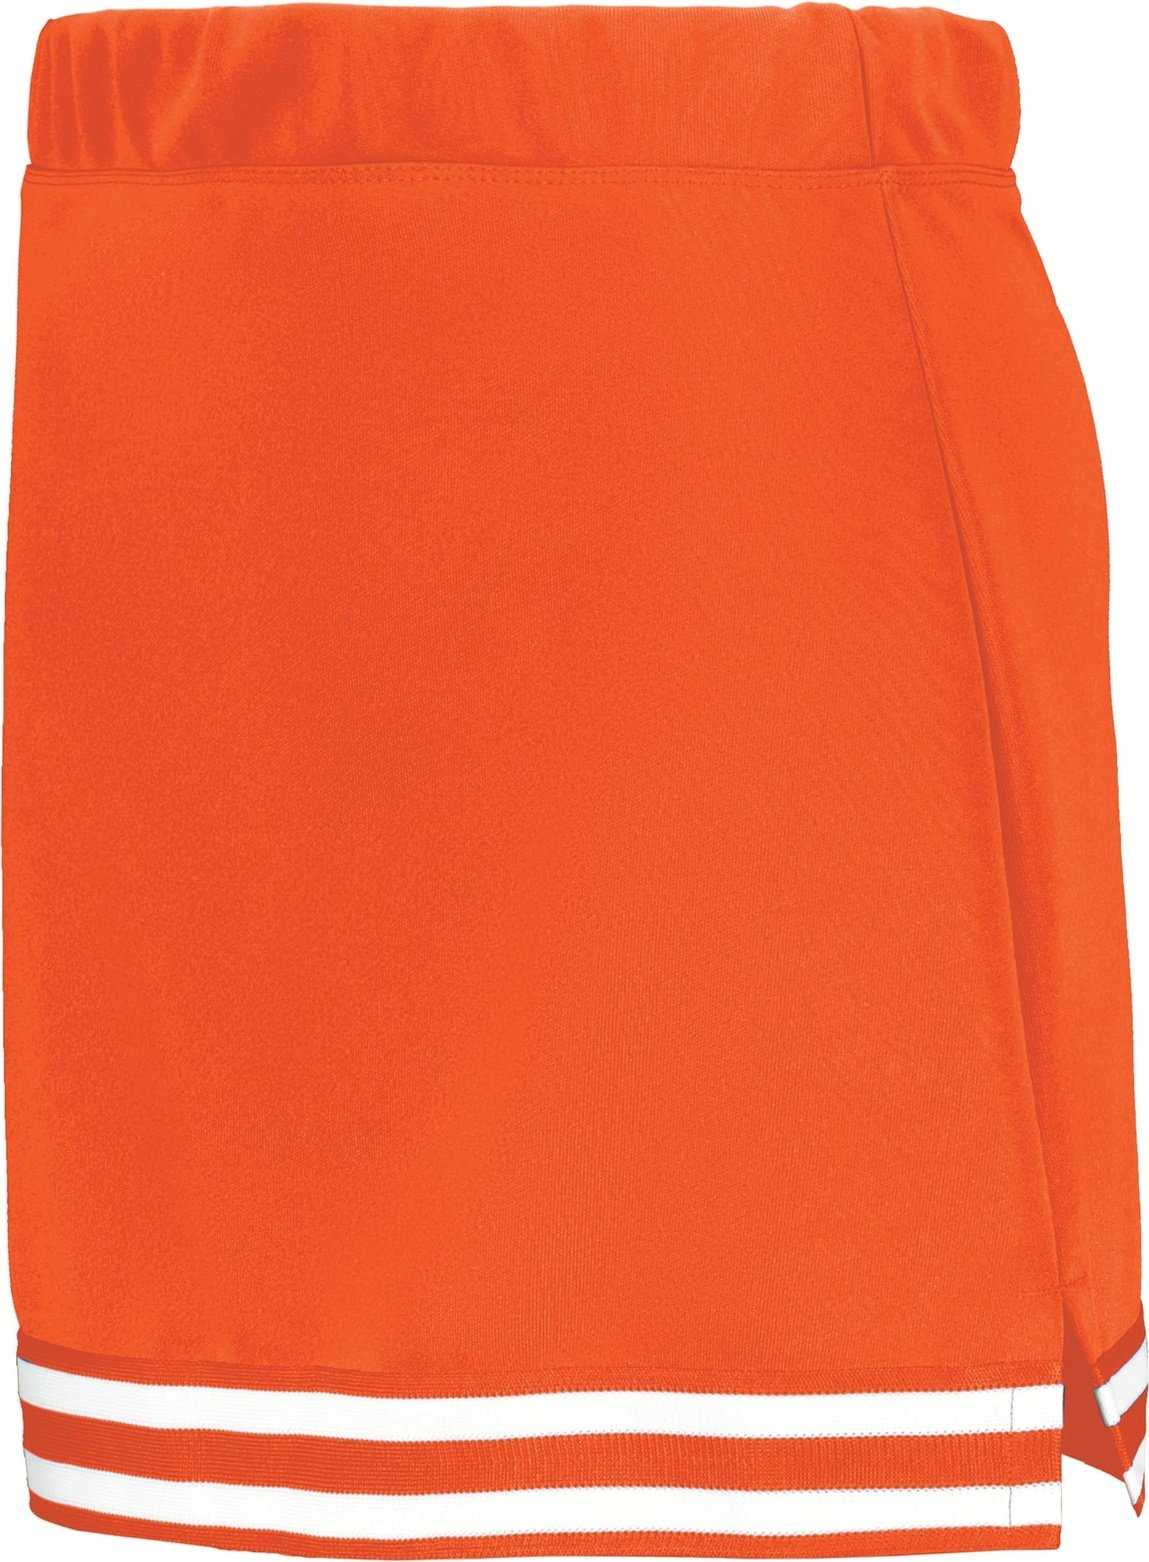 Augusta 6926 Girls Cheer Squad Skirt - Orange Orange White - HIT a Double